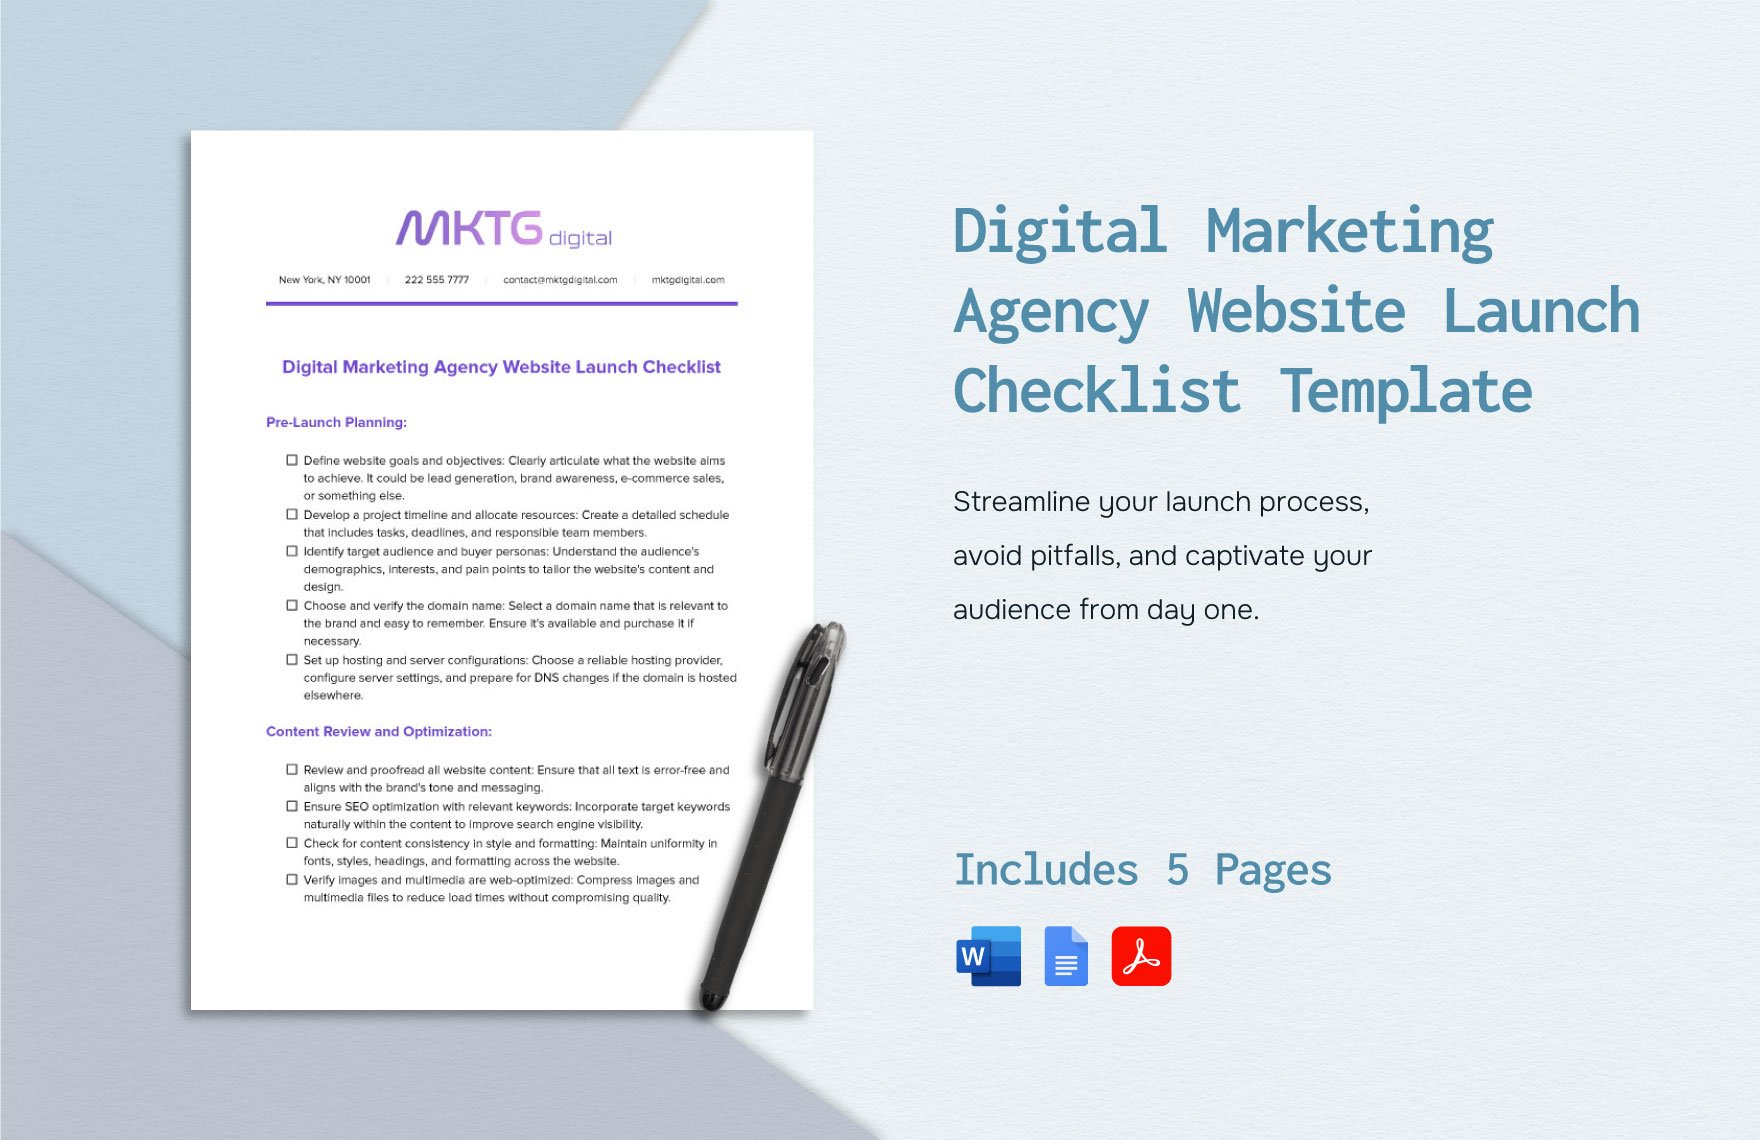 Digital Marketing Agency Website Launch Checklist Template